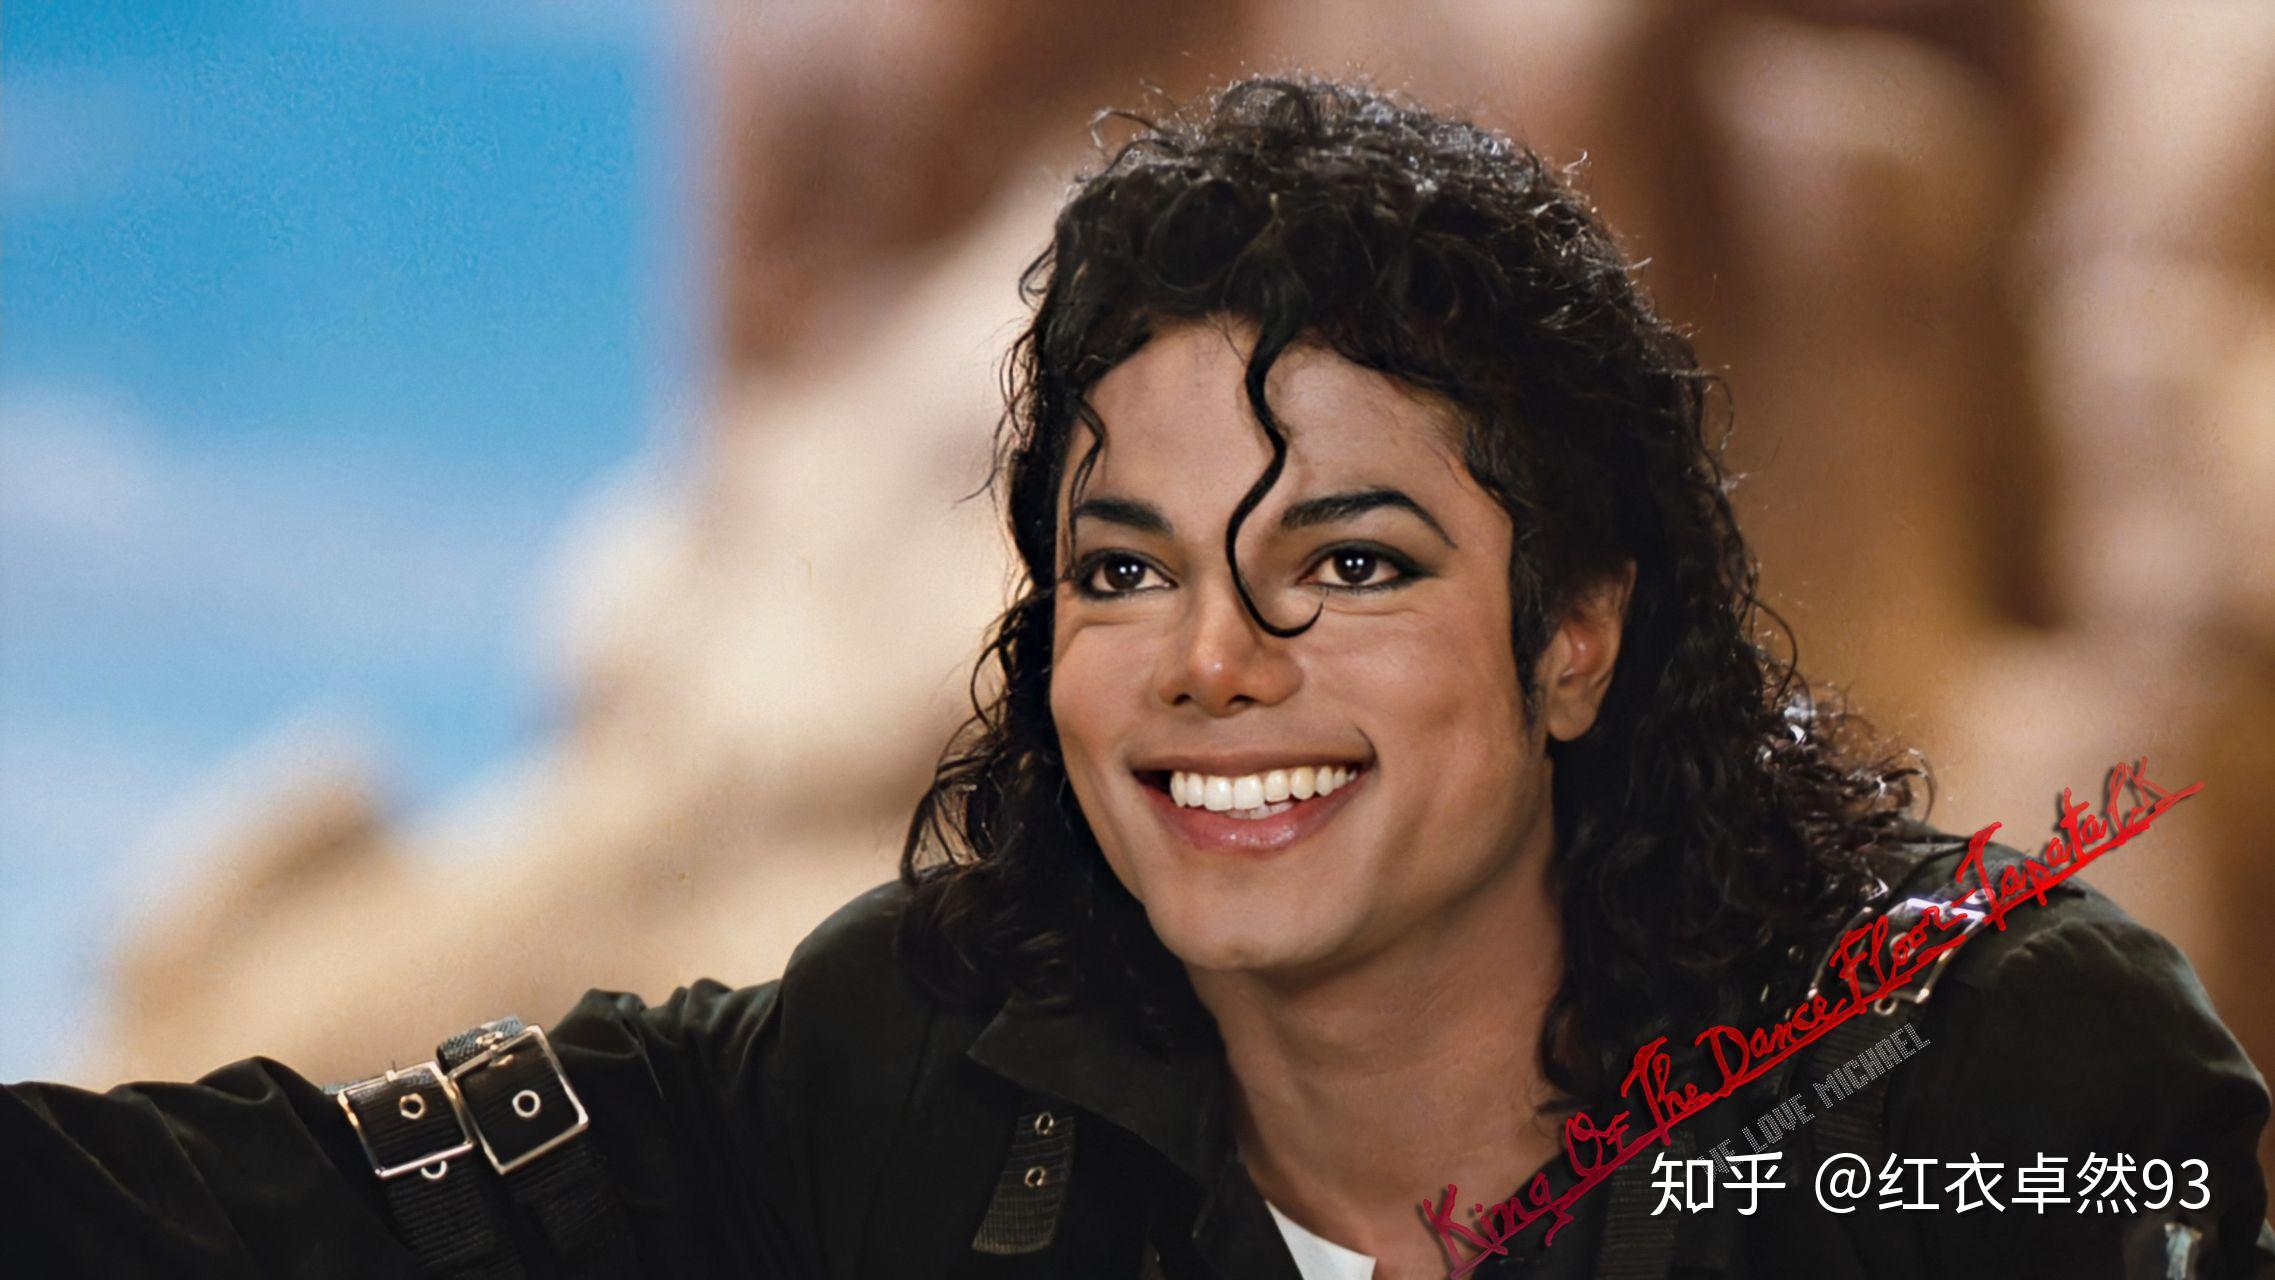 michael jackson - Michael Jackson Wallpaper (12051835) - Fanpop